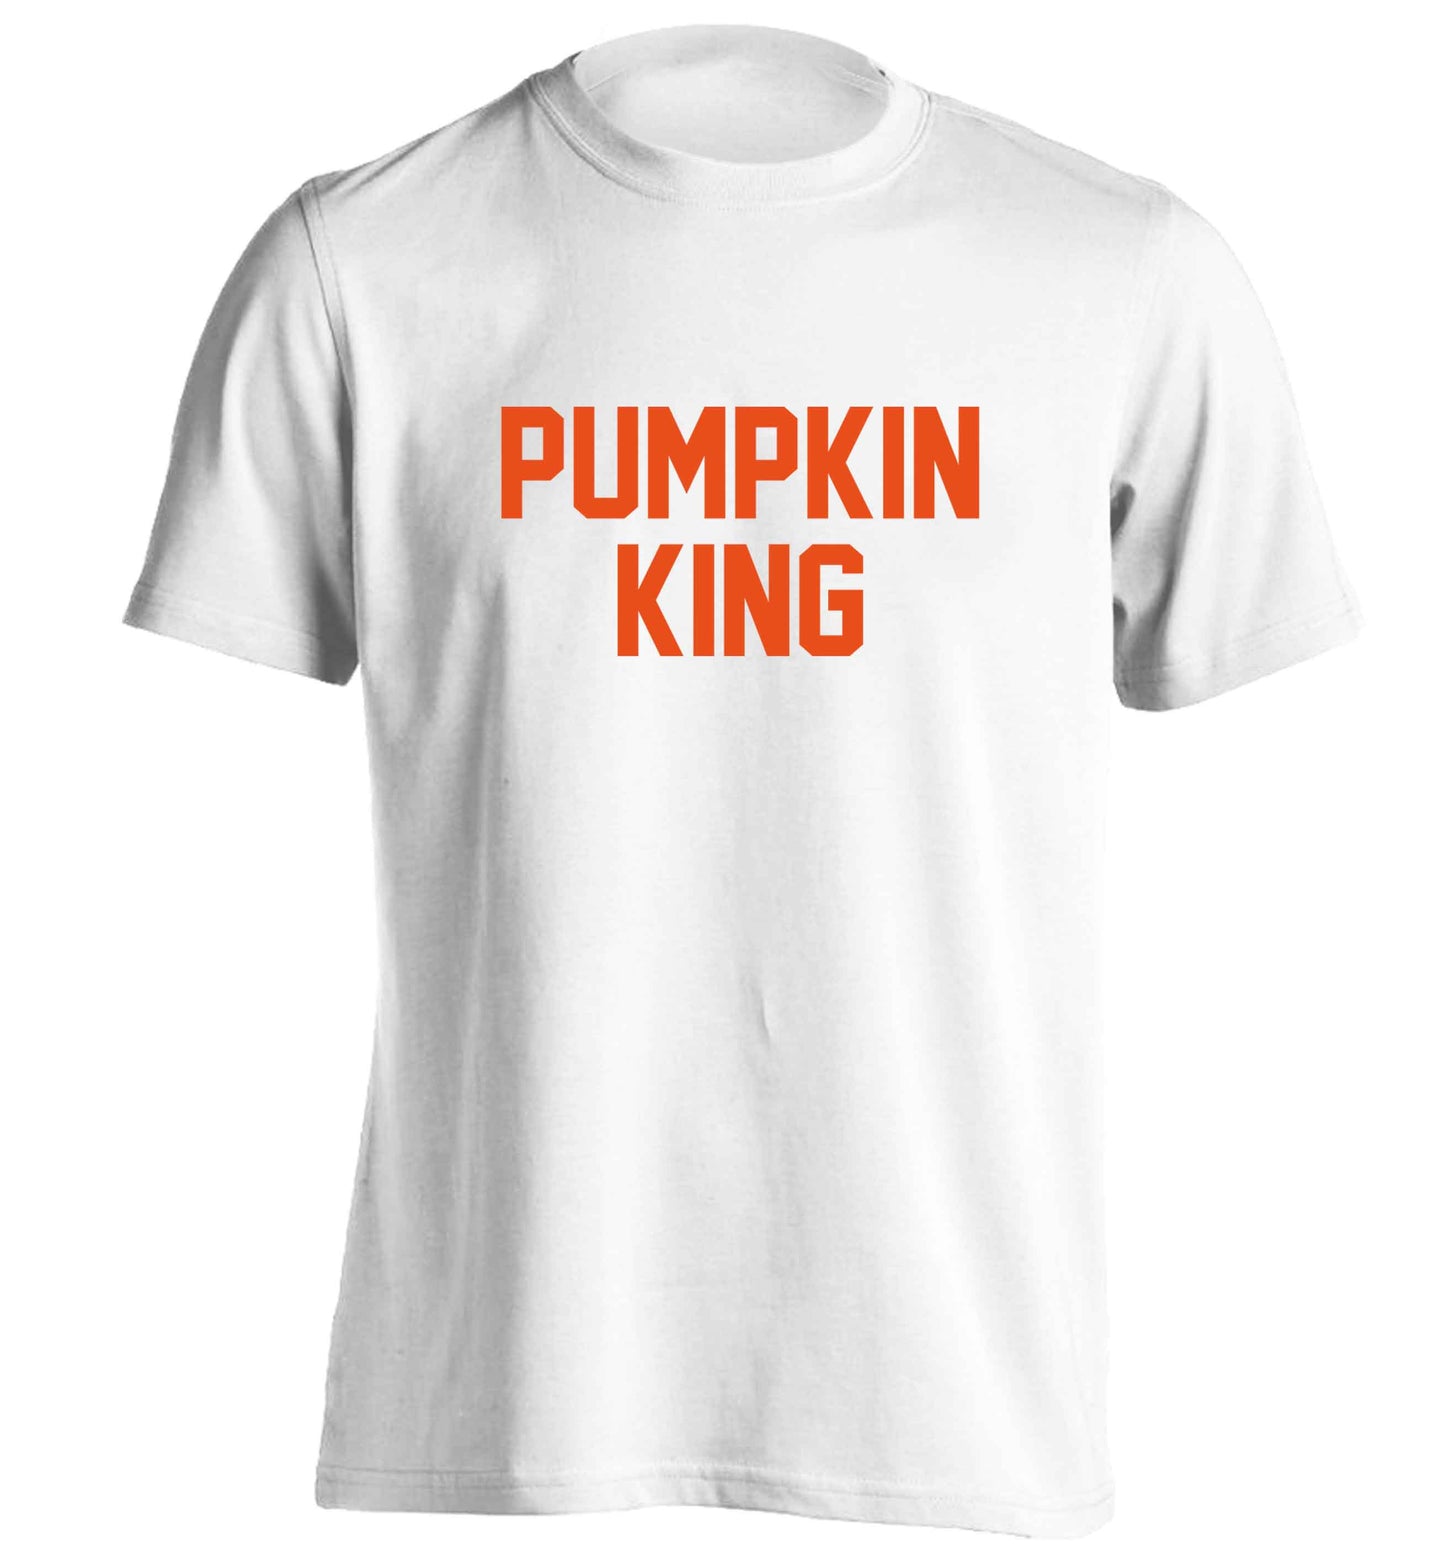 Pumpkin Queen adults unisex white Tshirt 2XL